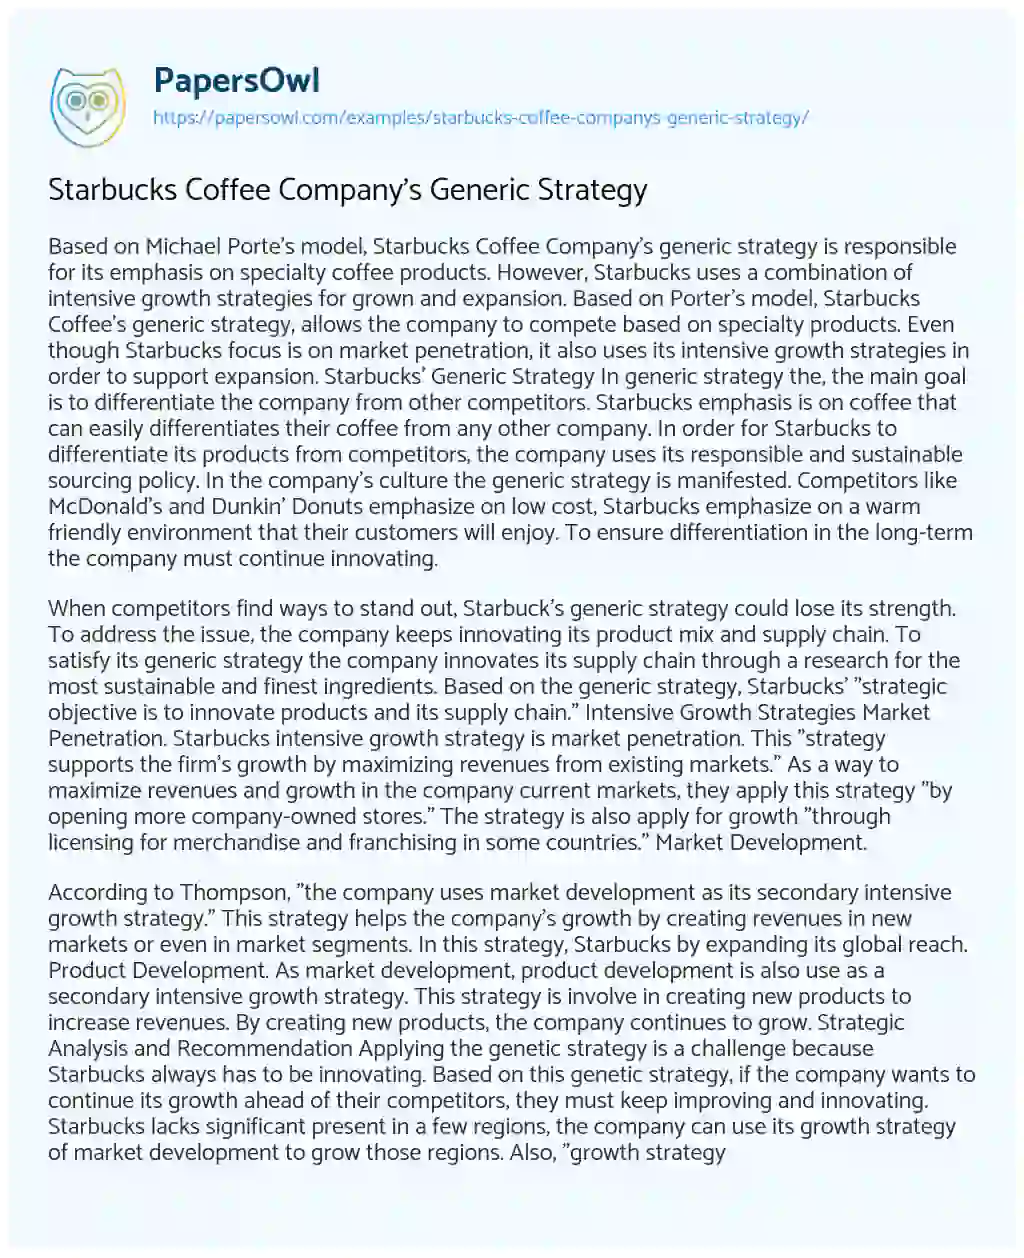 Essay on Starbucks Coffee Company’s Generic Strategy